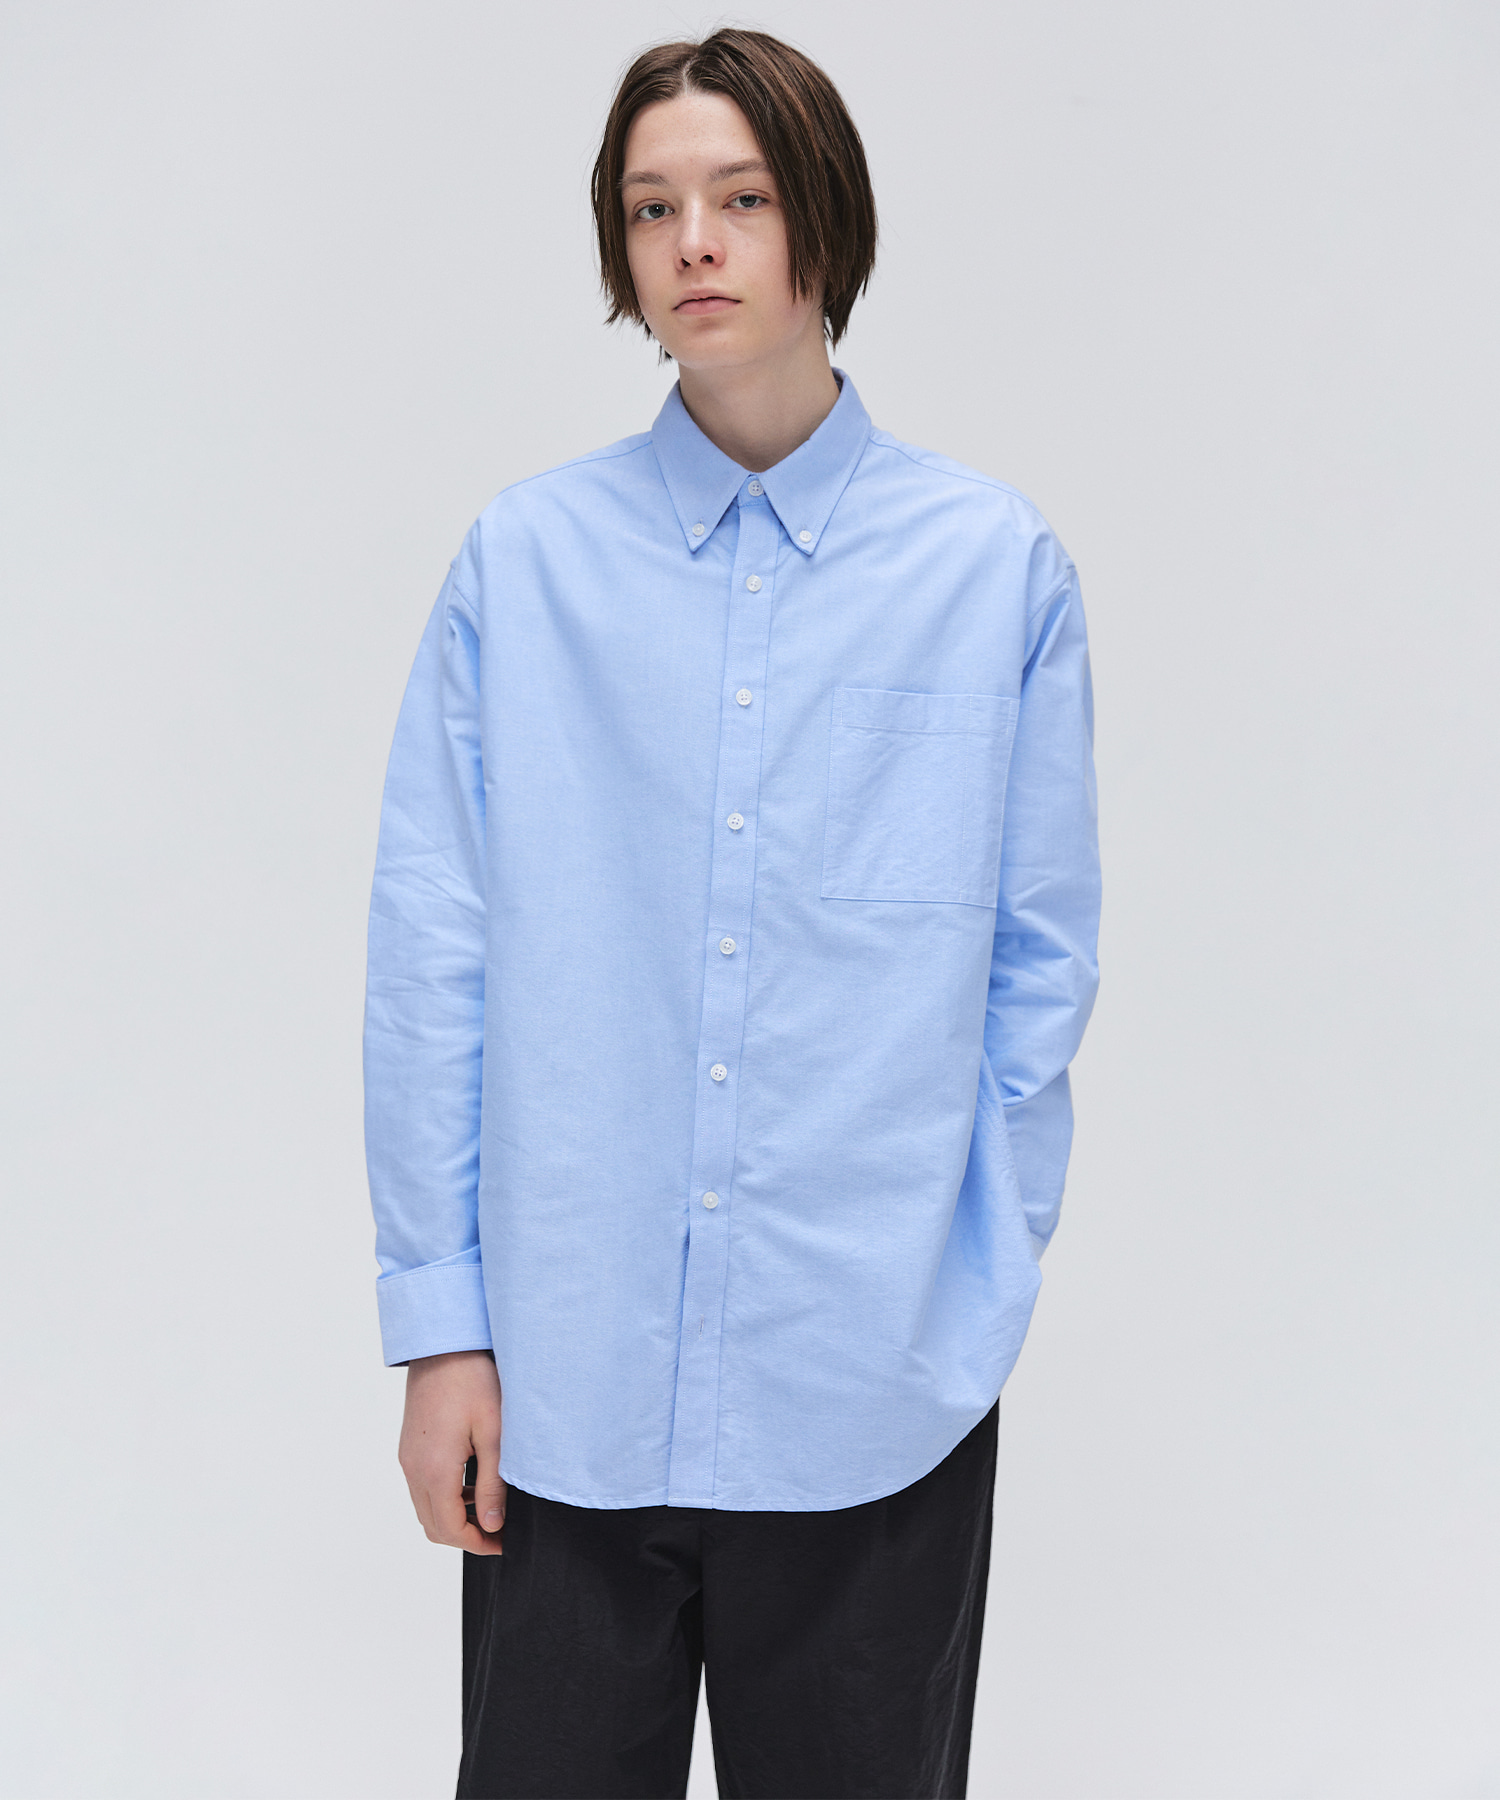 Button Down Oxford Shirts - Sky Blue